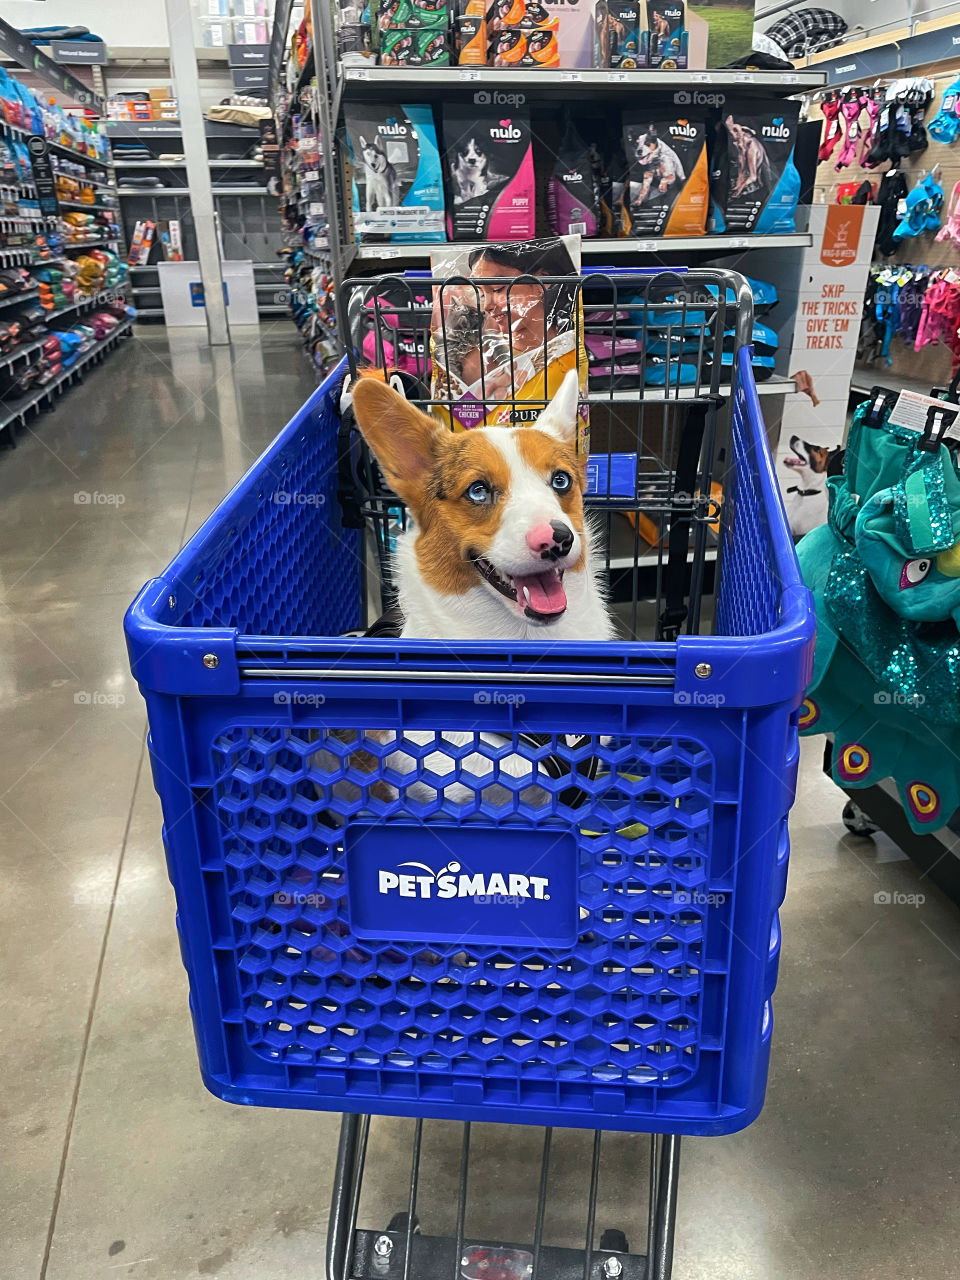 Corgi riding in shopping cart Petsmart fun good times blue eyes big ears happy dog smiling 